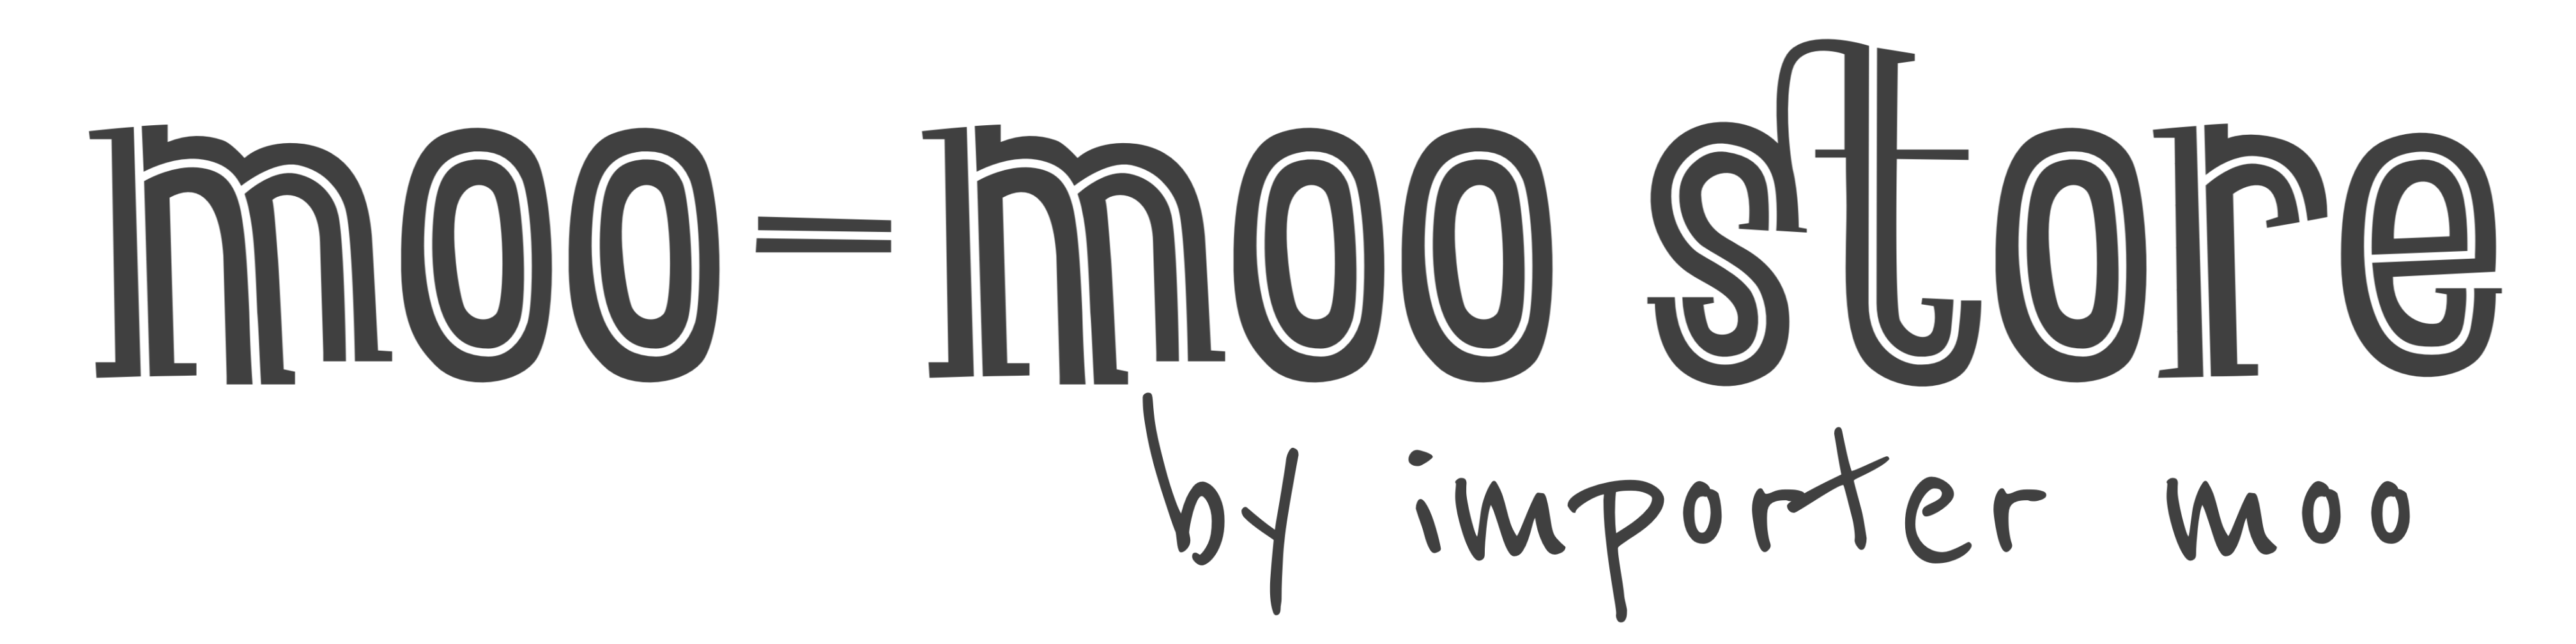 moo-moo store ロゴ